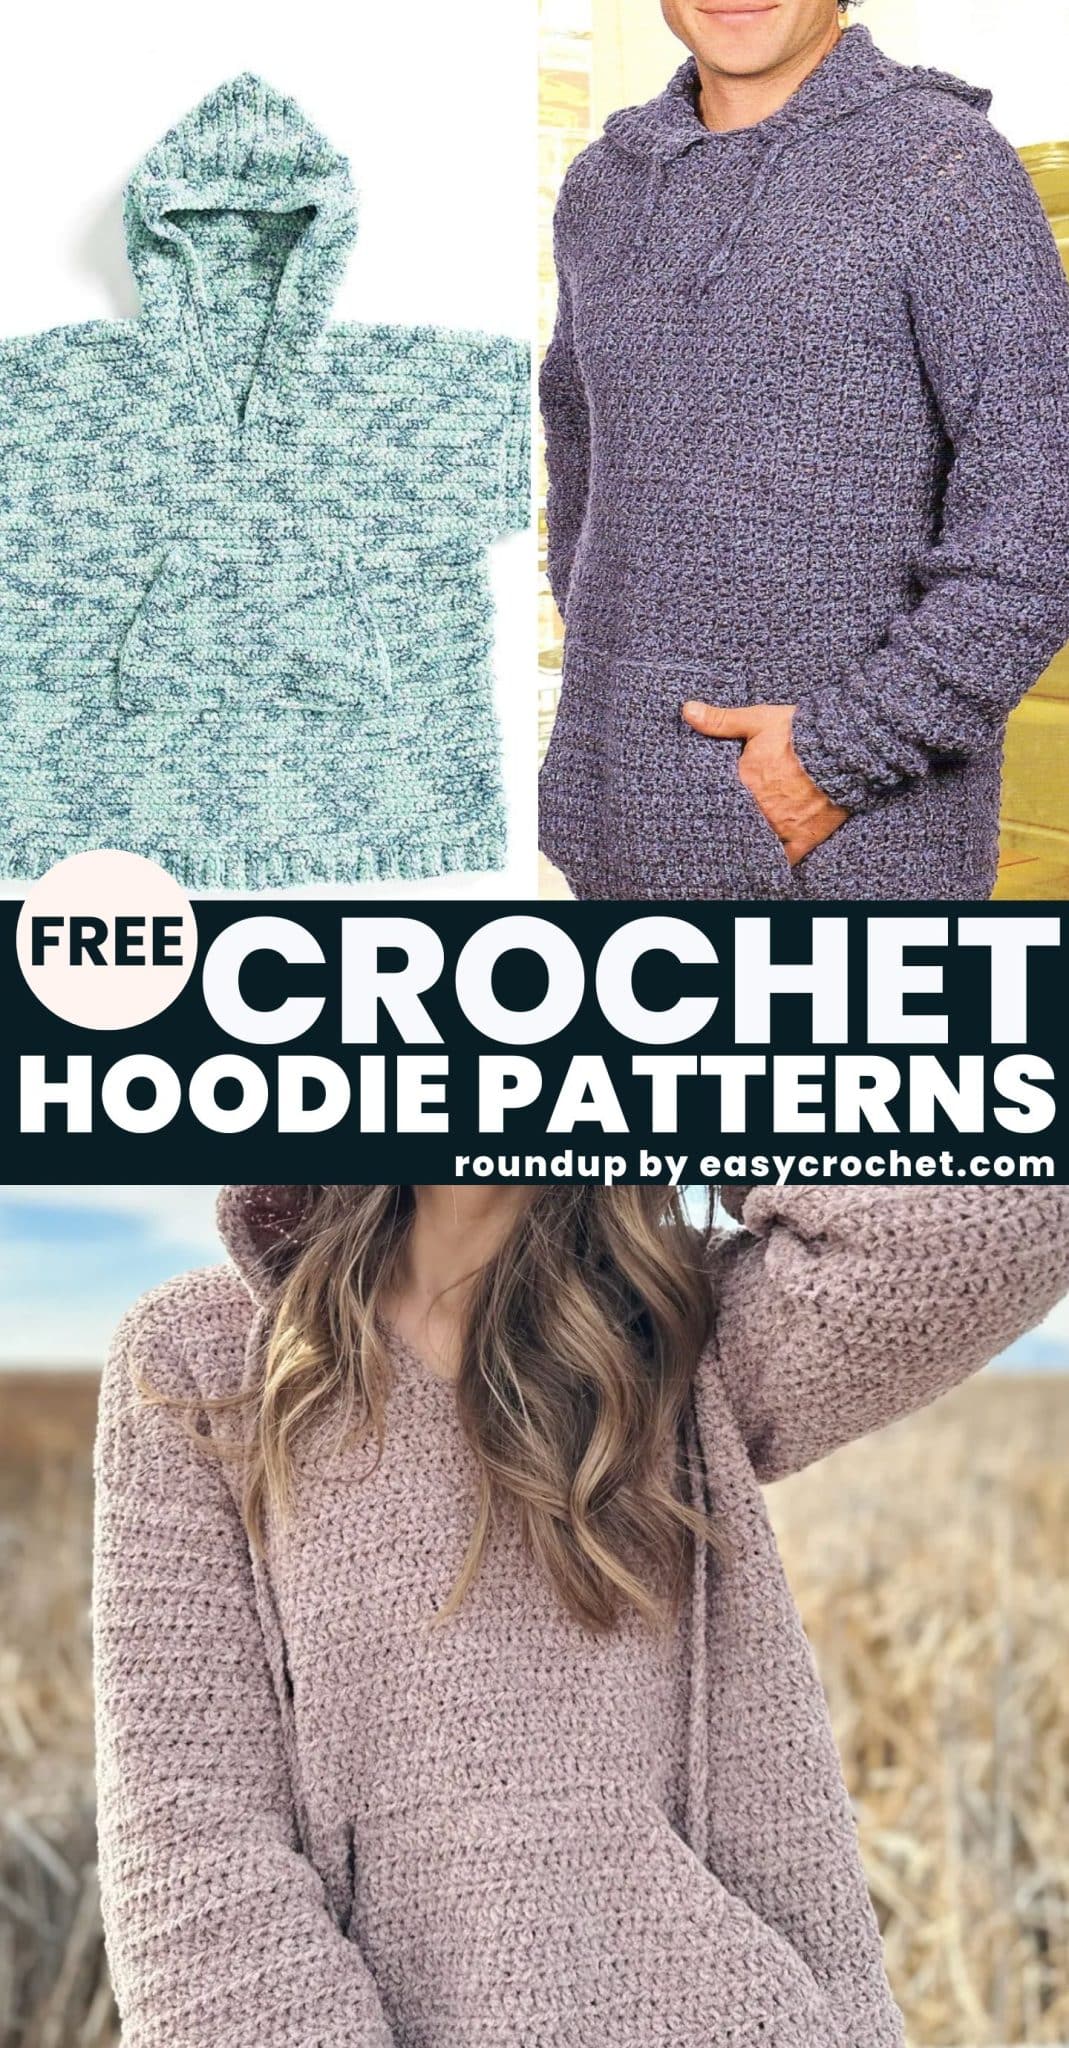 https://easycrochet.com/wp-content/uploads/2023/01/Crochet-Hoodie-Patterns-scaled.jpg